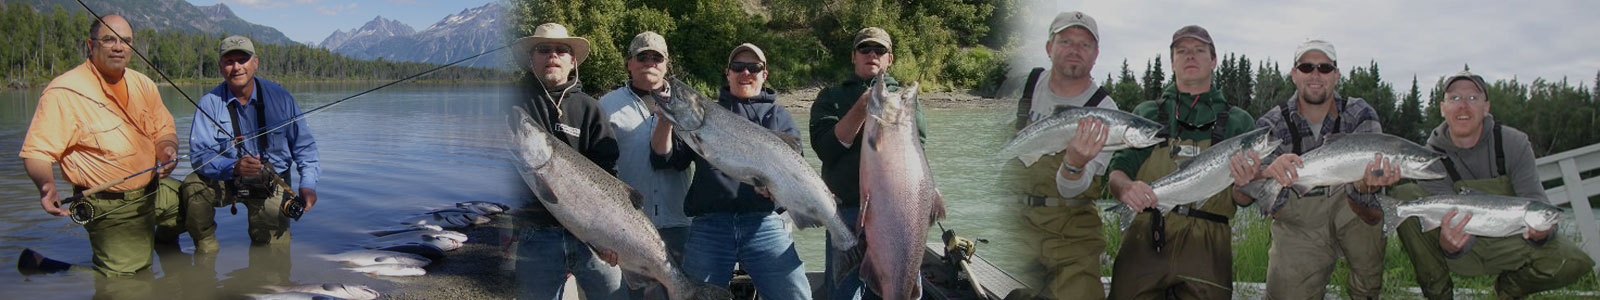 Alaskan Fishing Trip